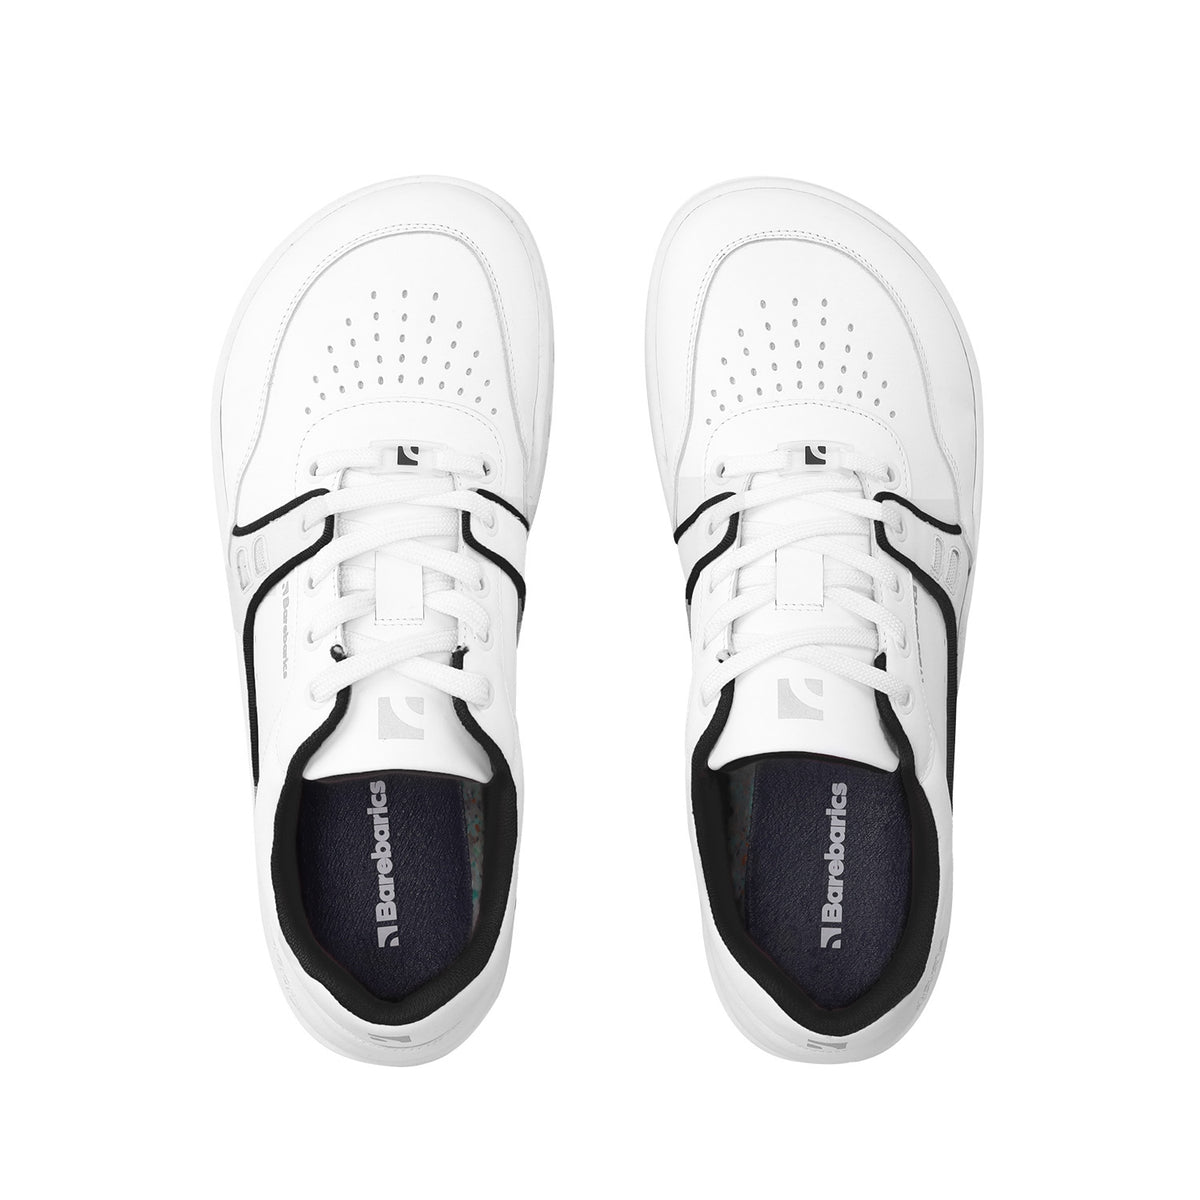 Barefoot Sneakers Barebarics Arise - White & Black 5  - OzBarefoot